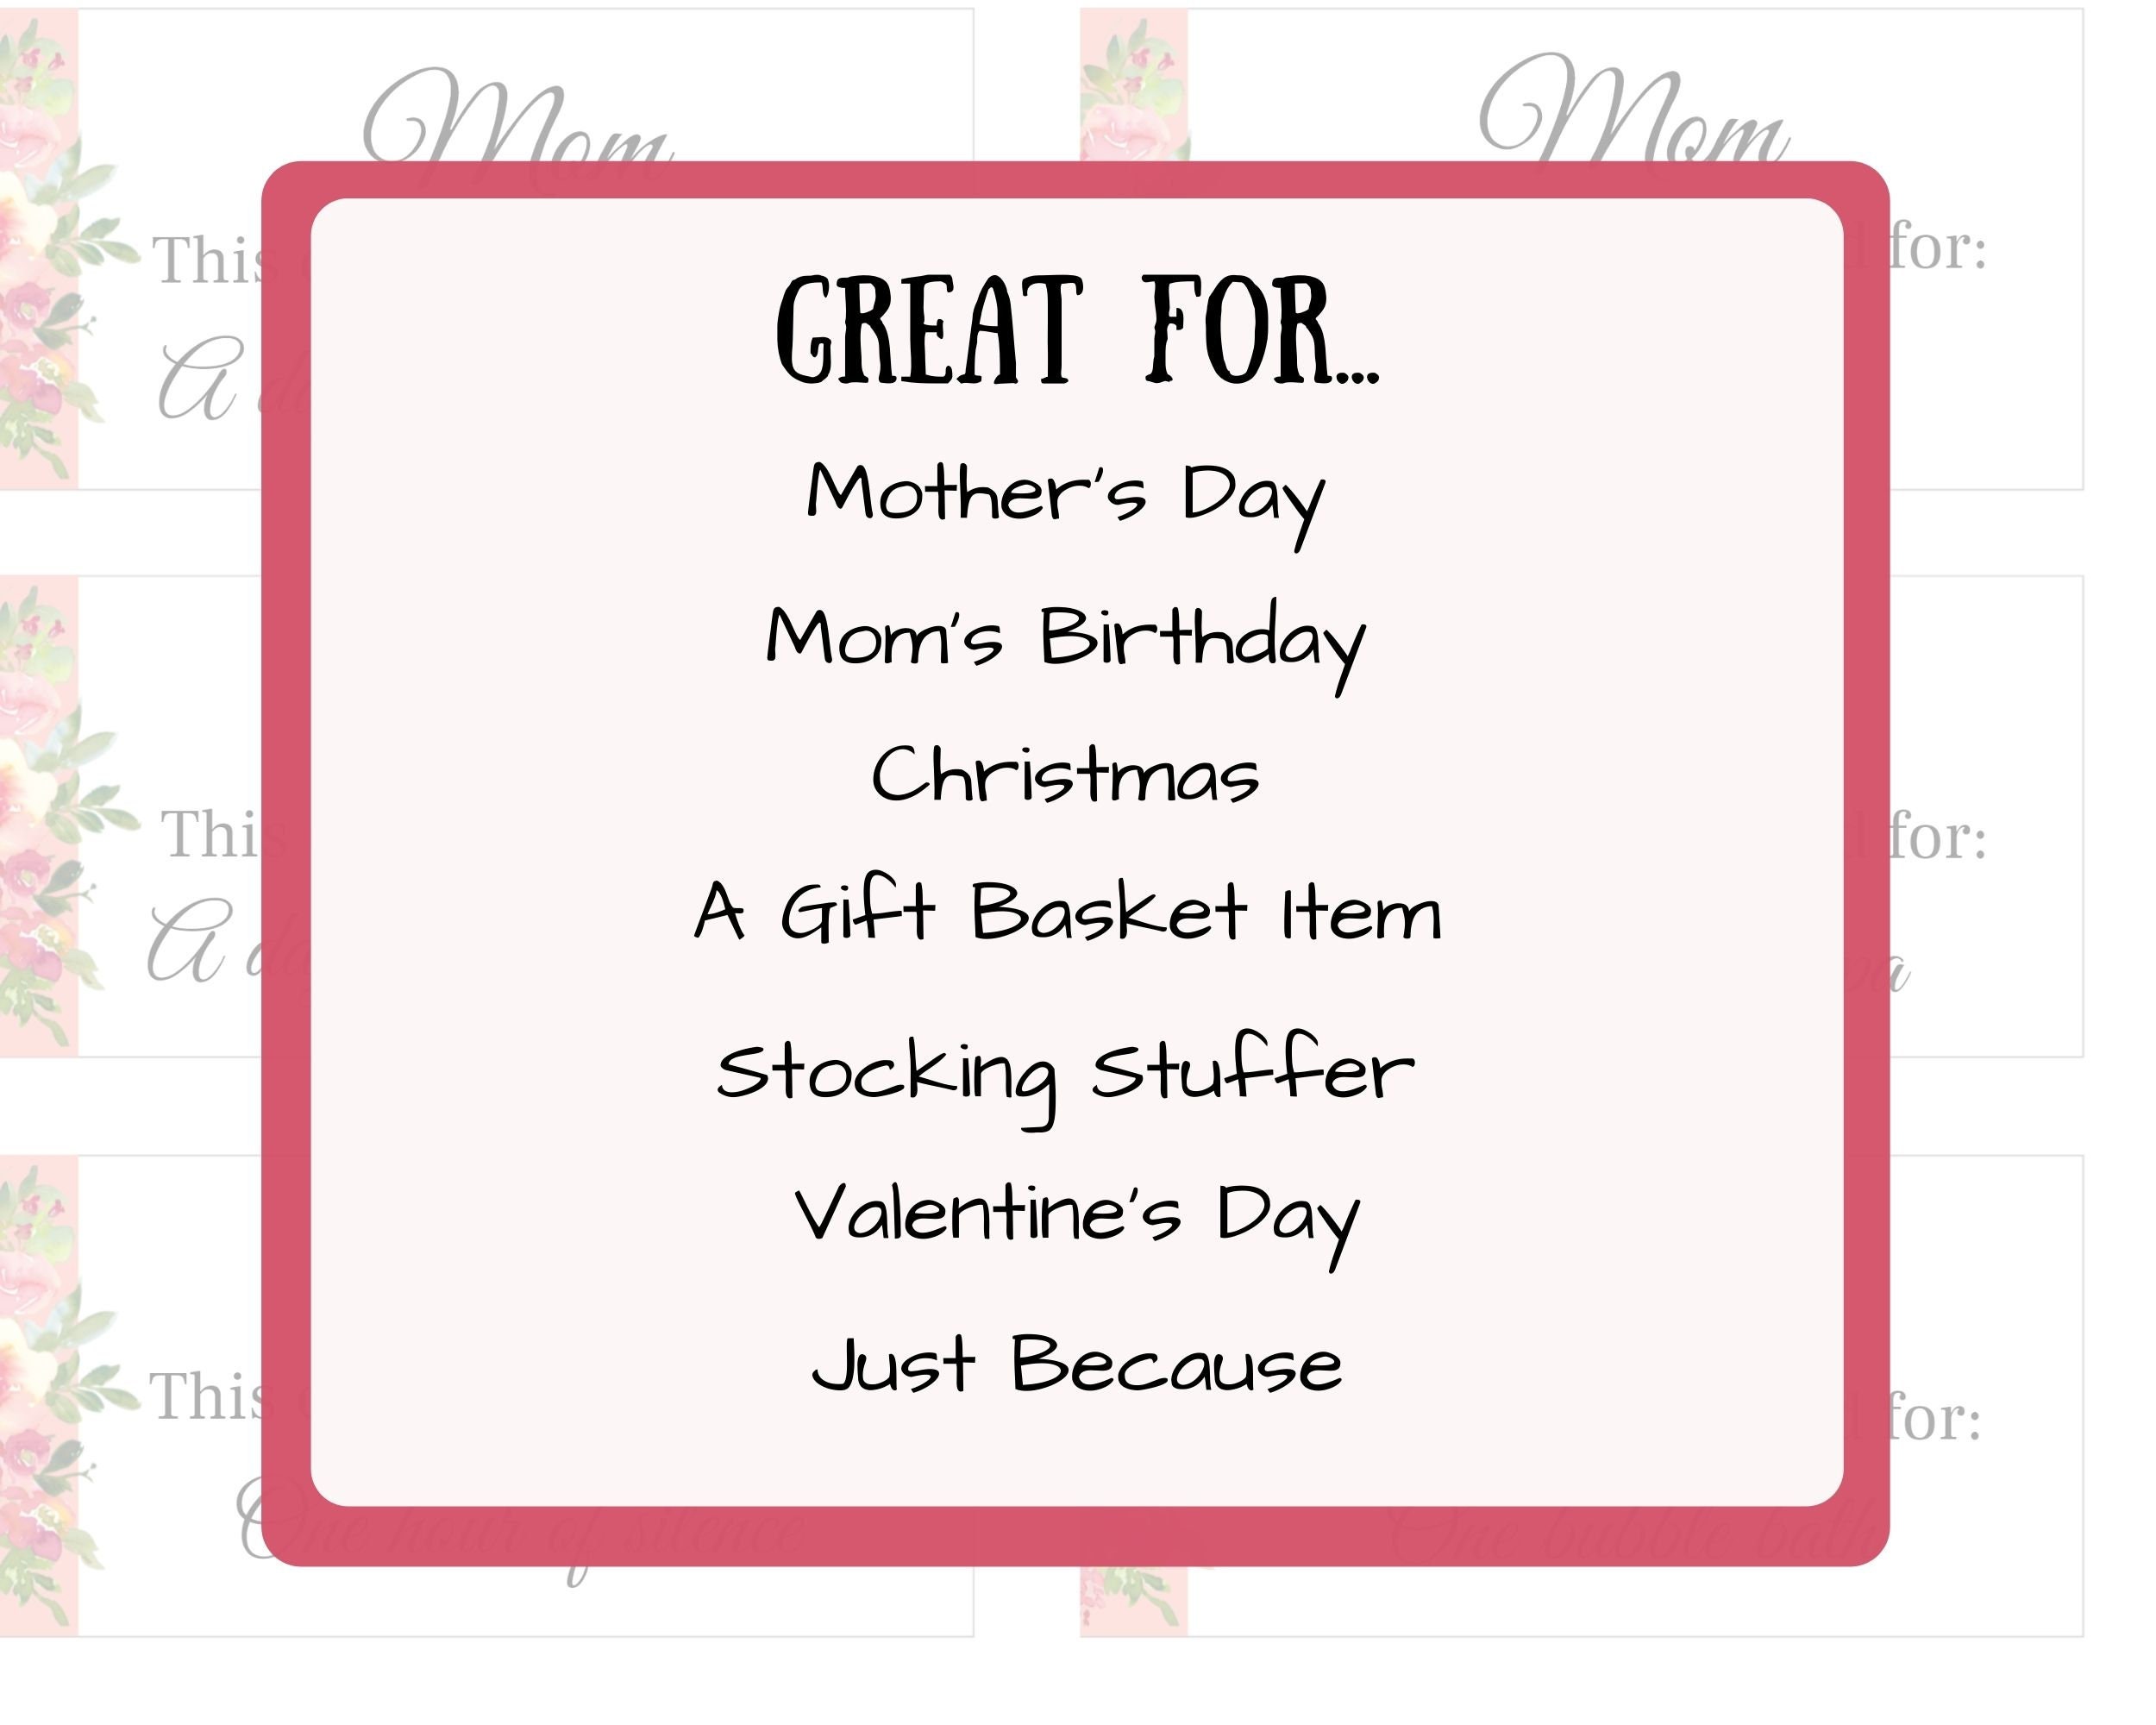 Bon Femmes - Cool Mom Checklist Card - Dusk Goods & Gifts